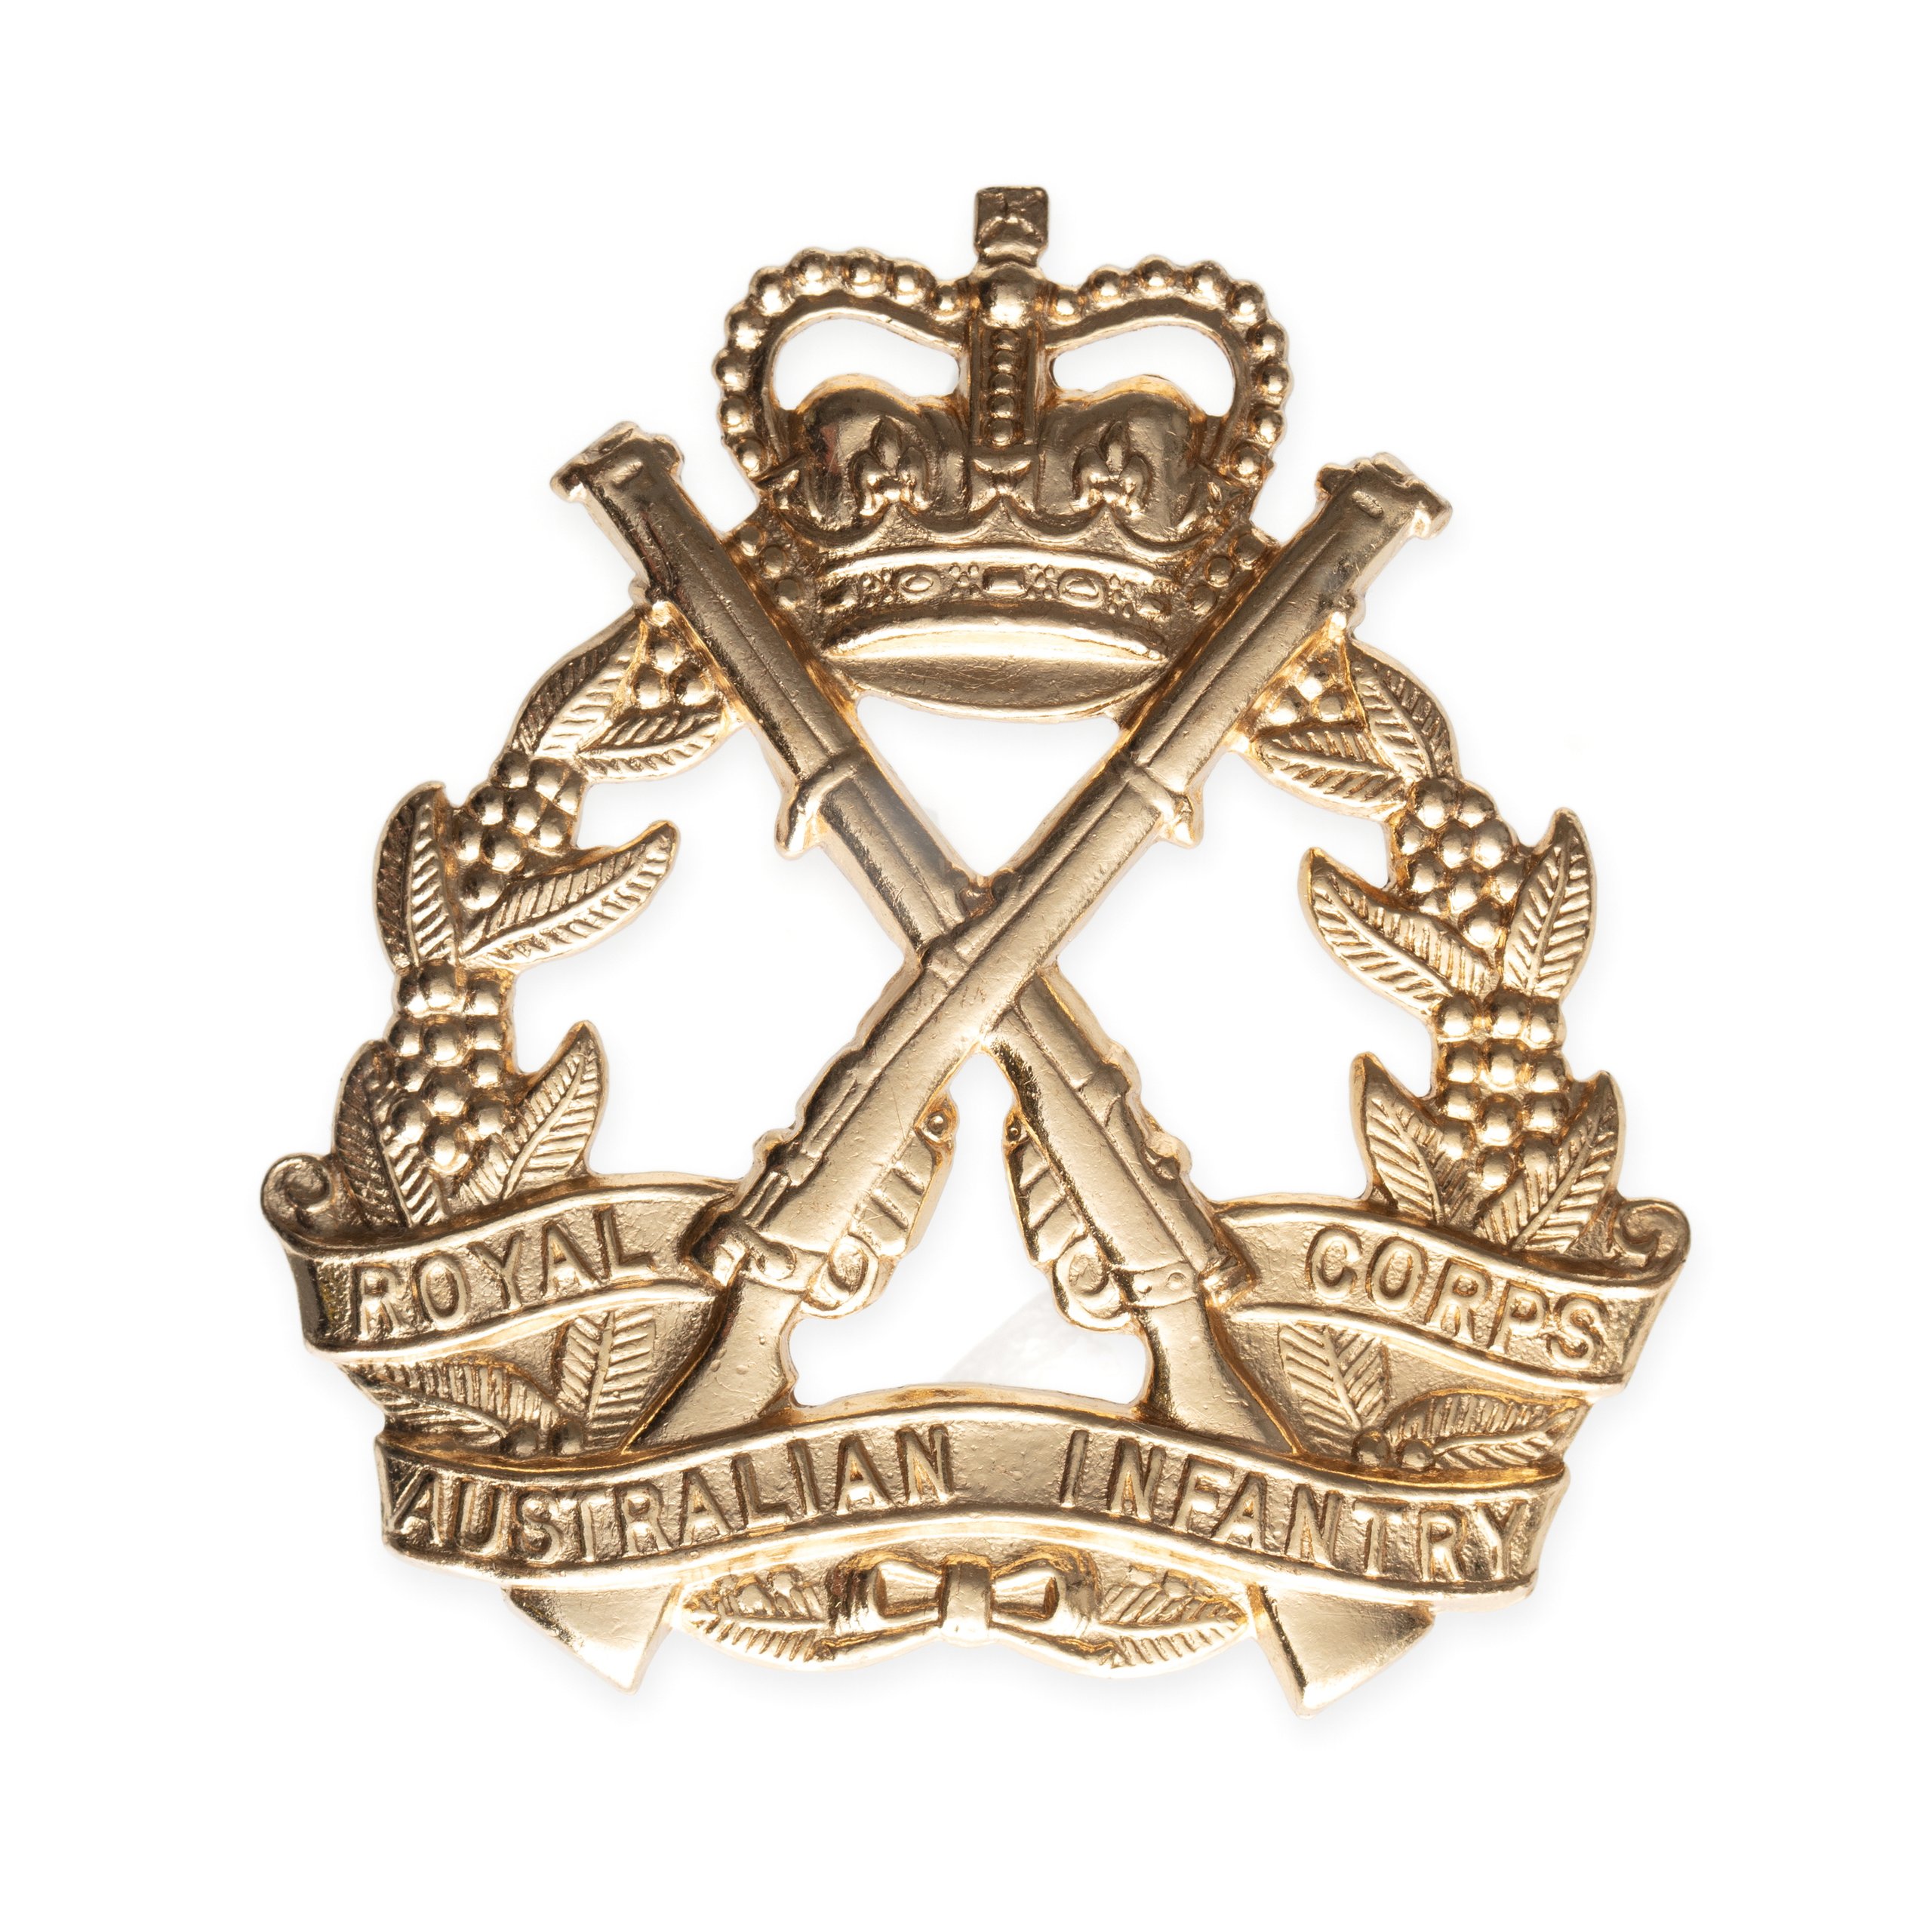 'Royal Australian Infantry Corps' hat badge